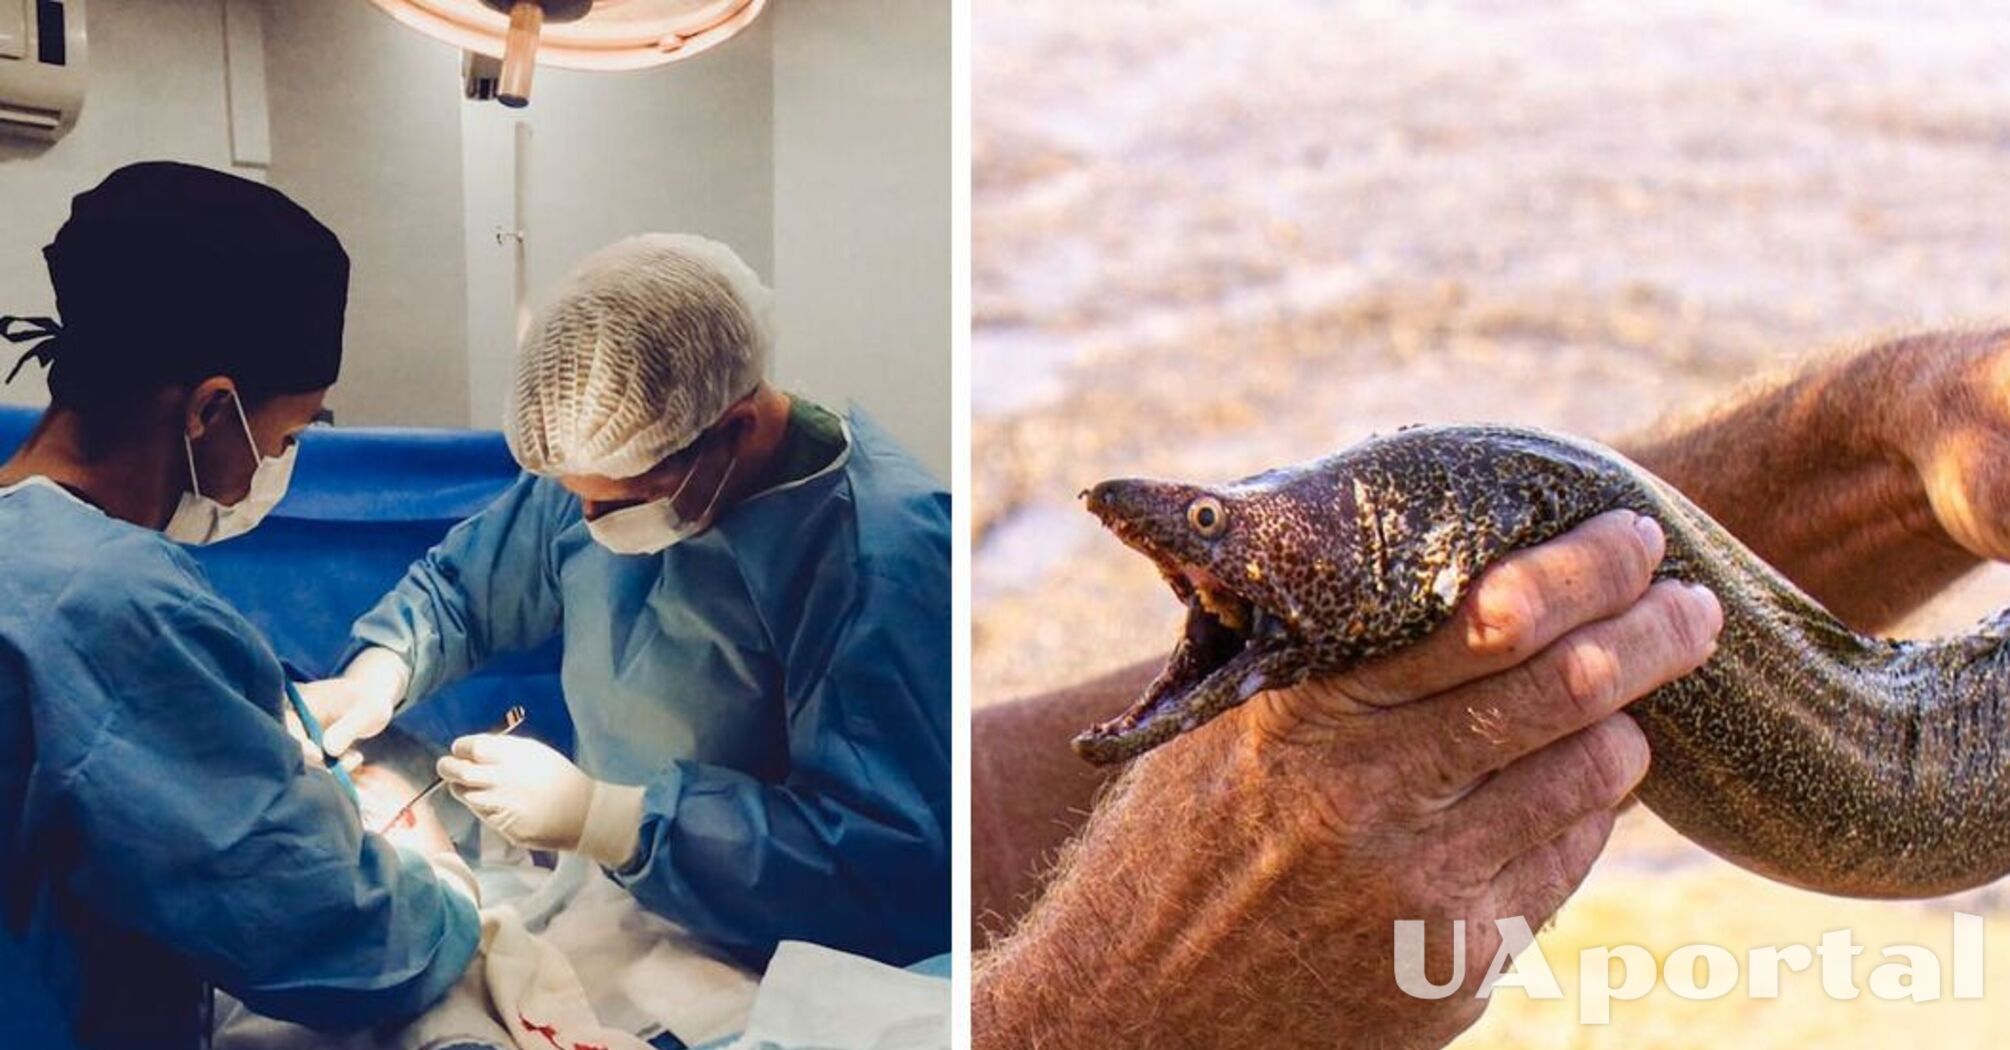 Врачи во время операции обнаружили внутри пациента живое 30-сантиметровое существо (фото)